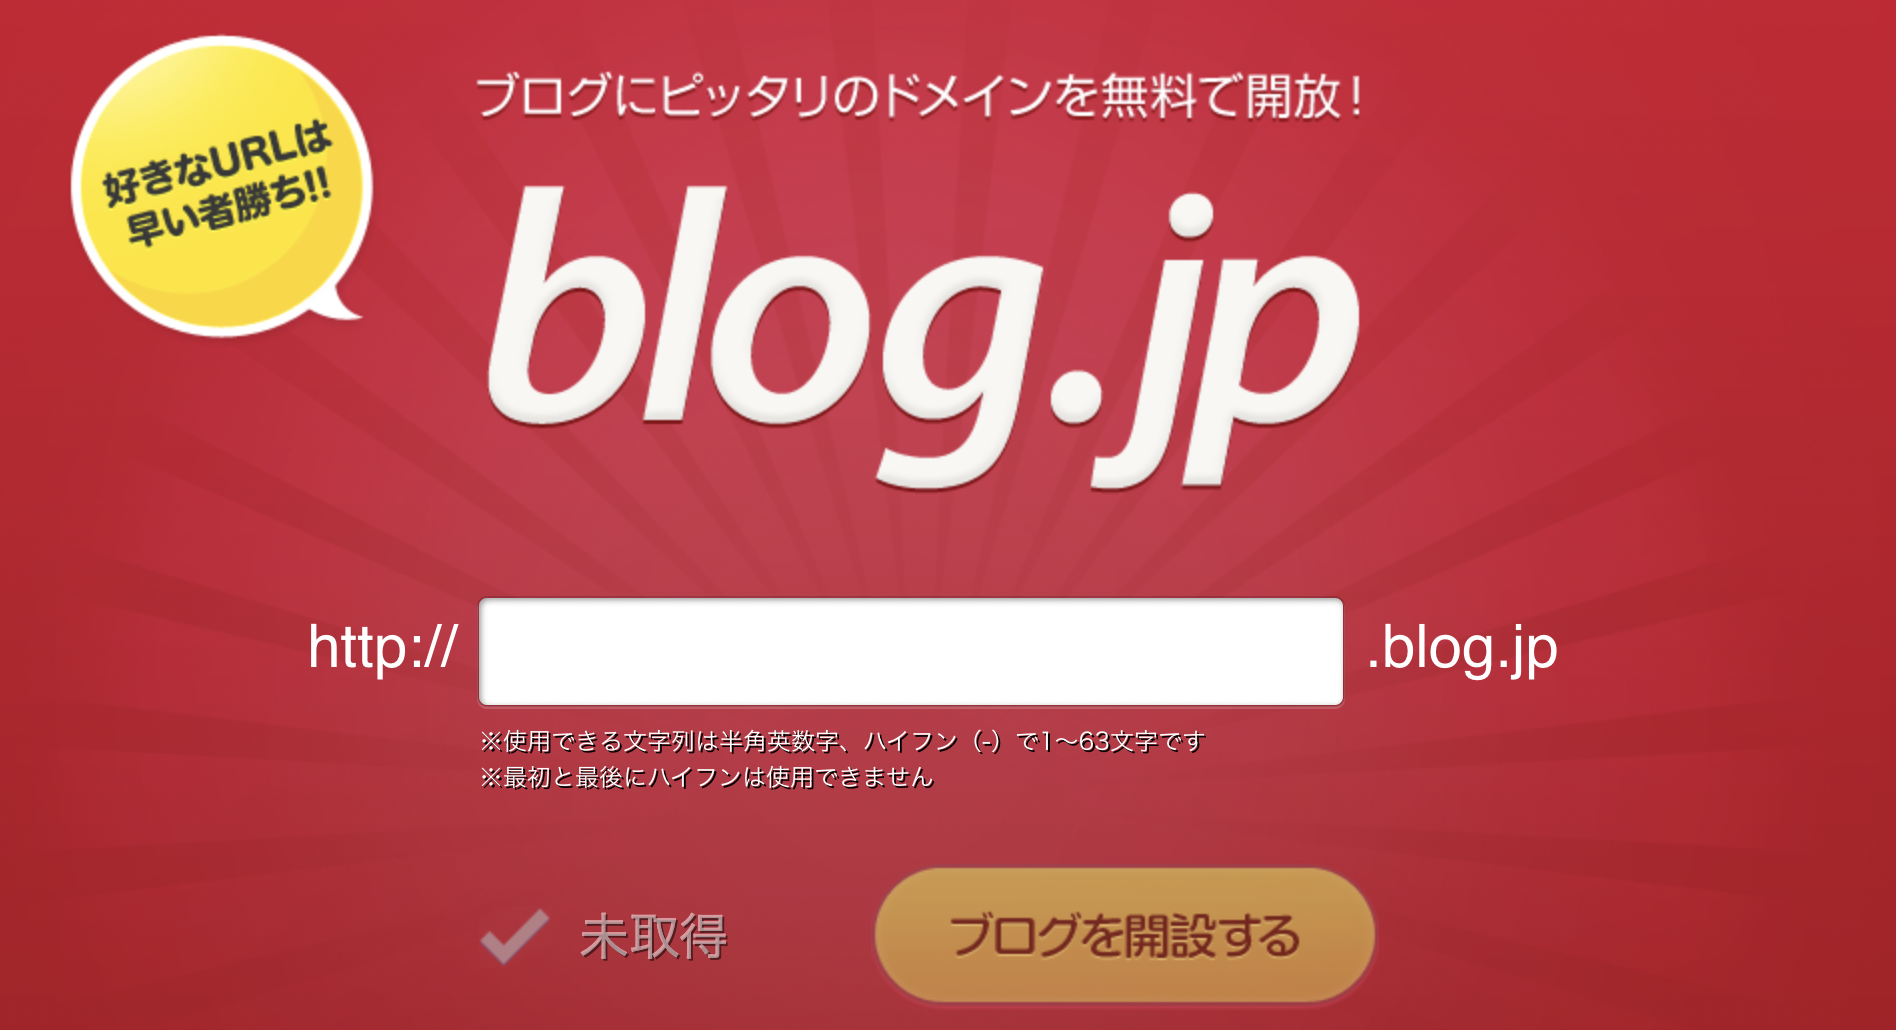 blog.jp